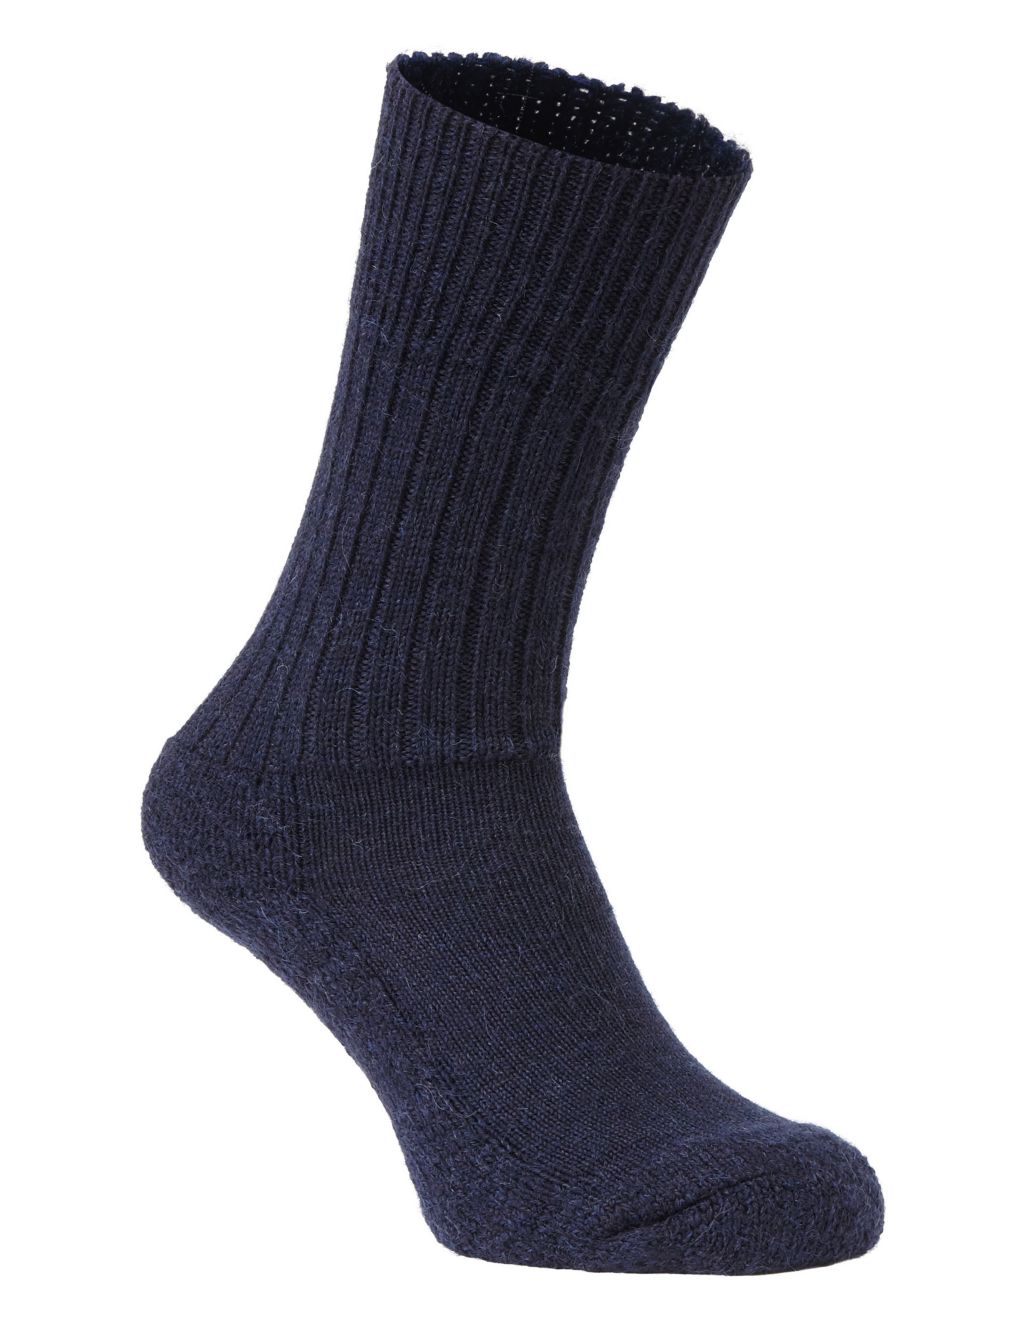 Wool Rich Ankle High Hiking Socks image 1